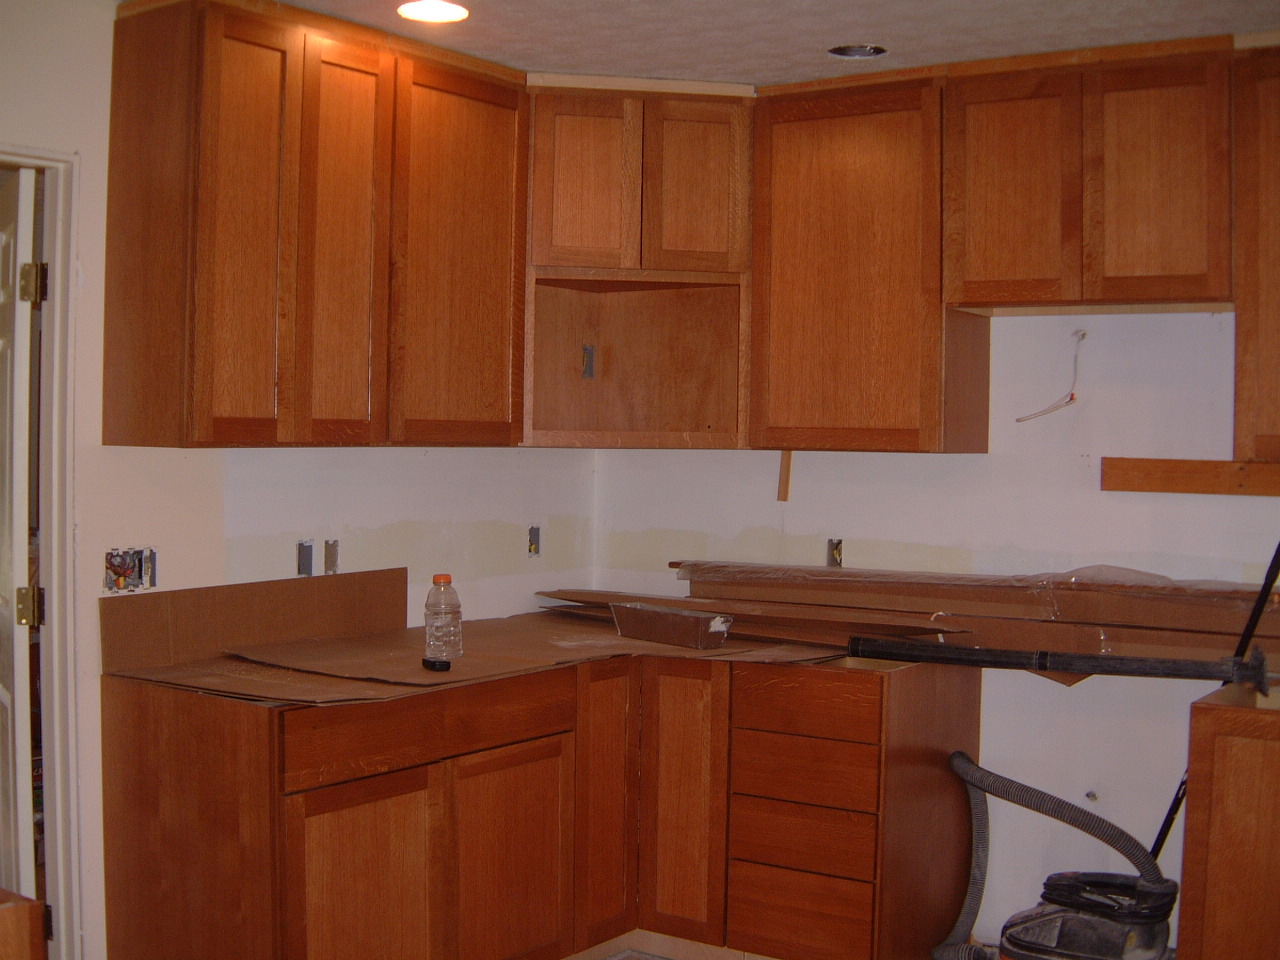 Washington Township Kitchen Remodel